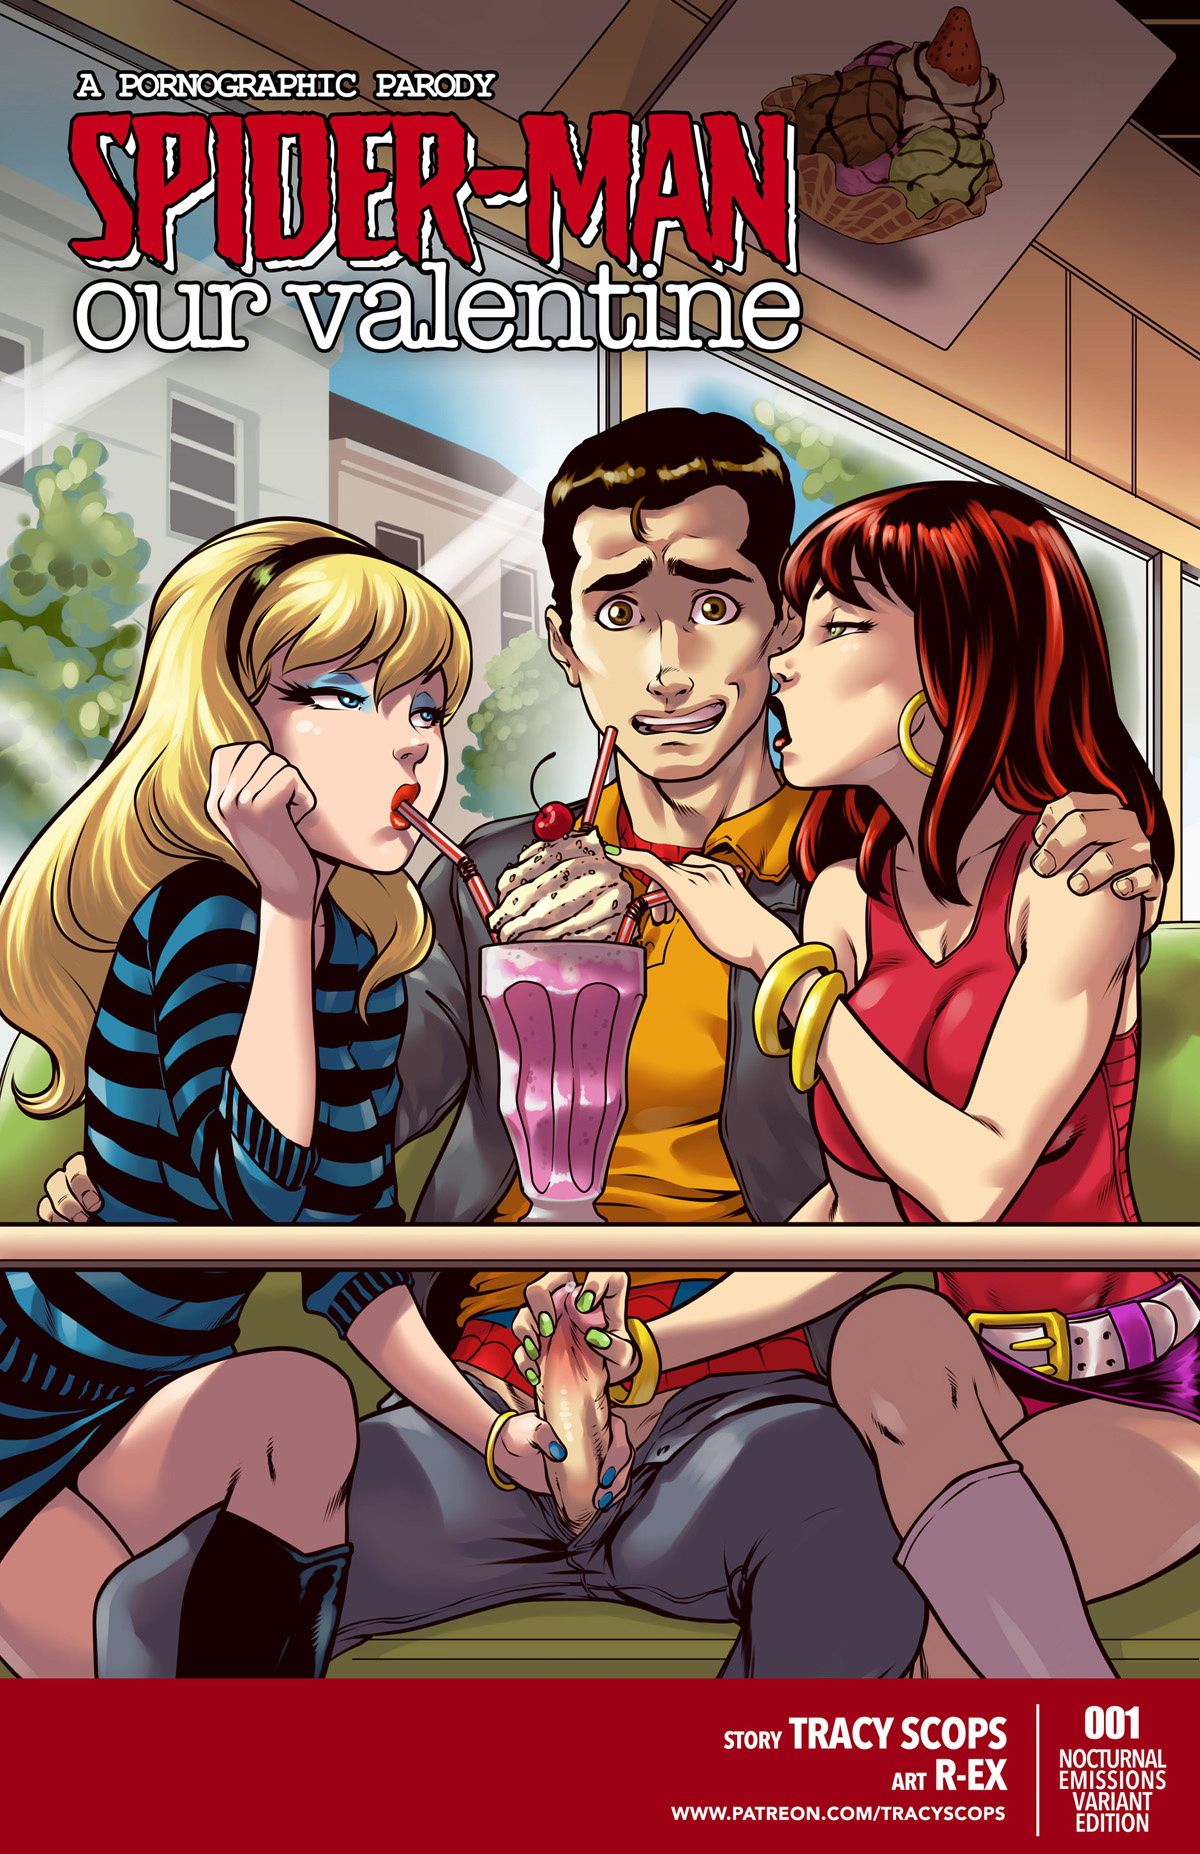 Valentine Porn Comics - Our Valentine (Spider-Man) [Tracy Scops] Porn Comic - AllPornComic